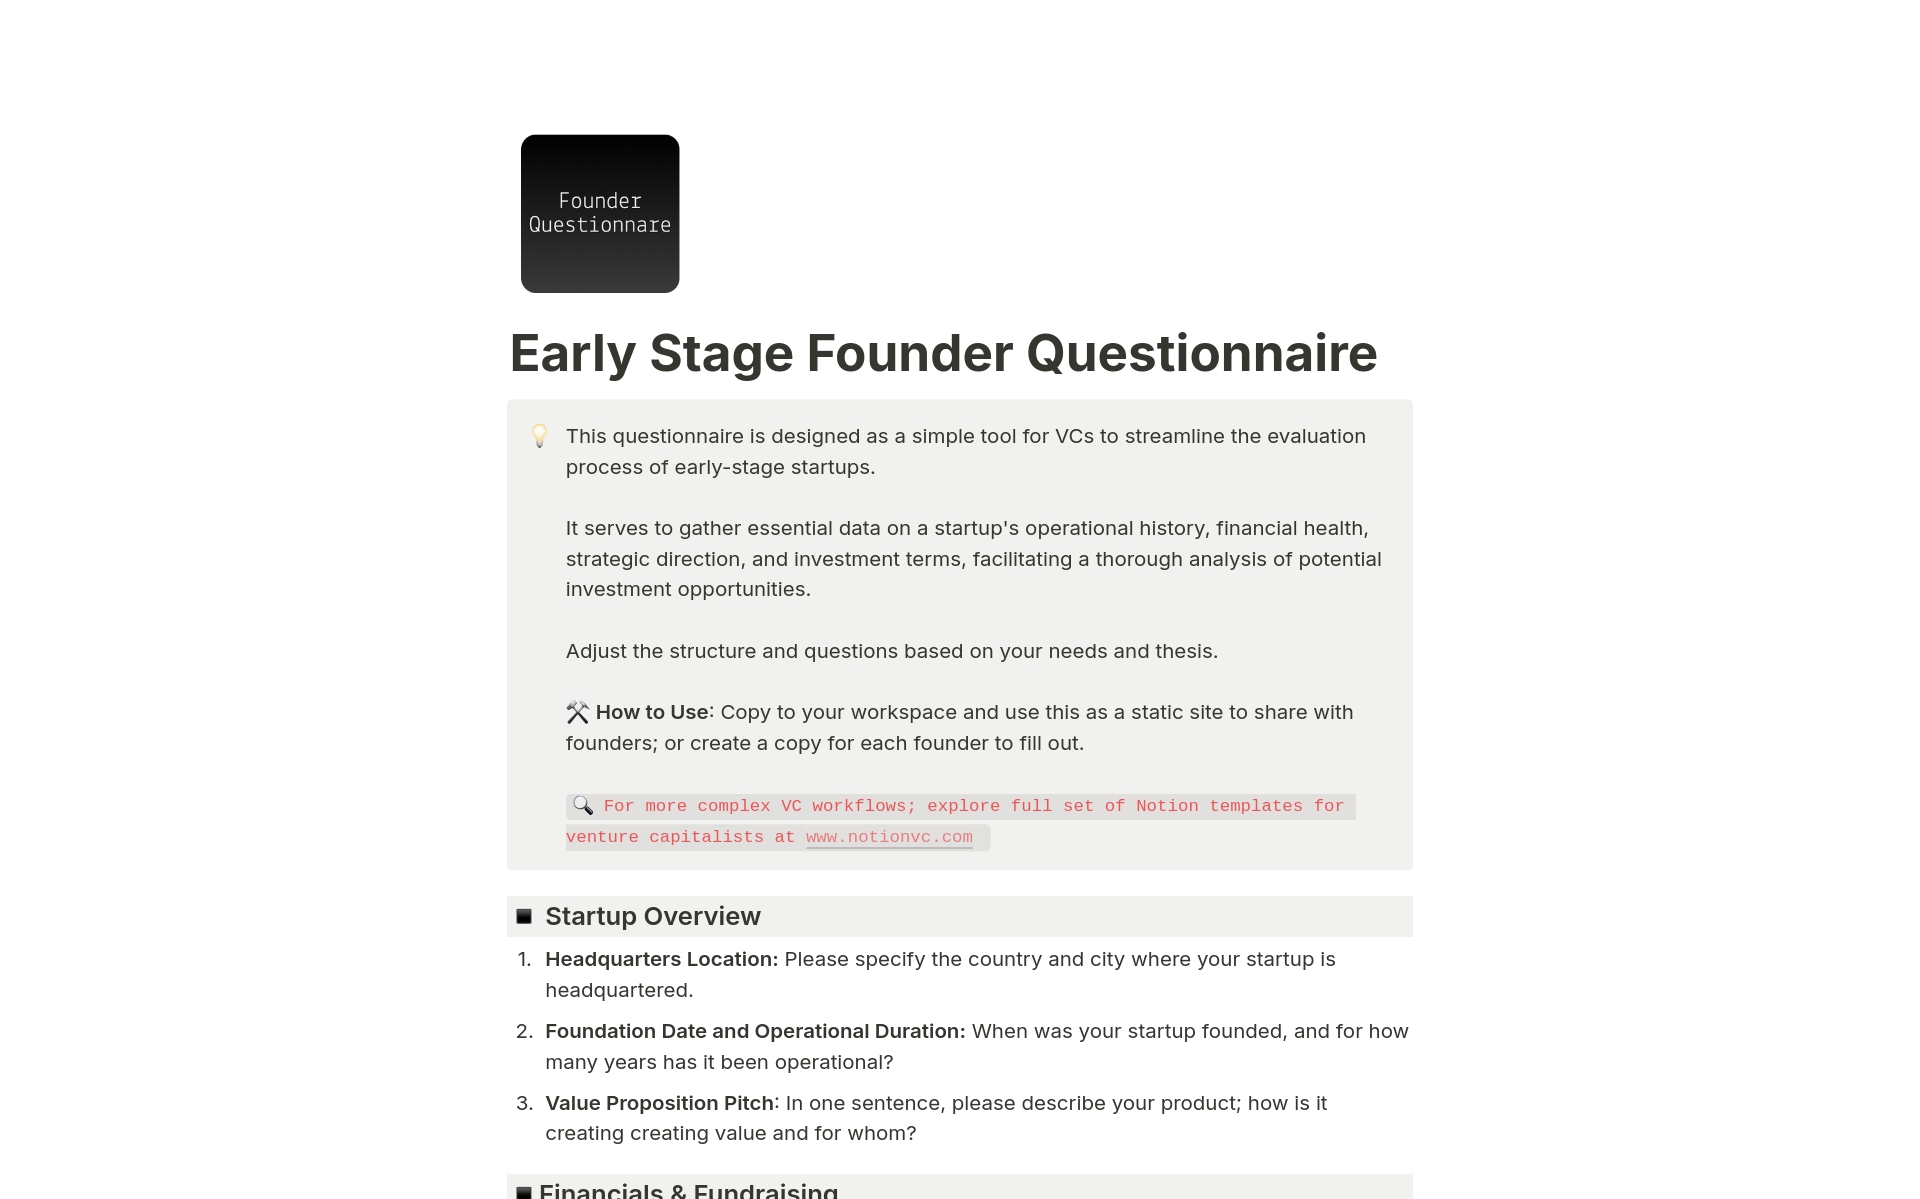 Vista previa de plantilla para Early Stage Founder Questionnare for VCs